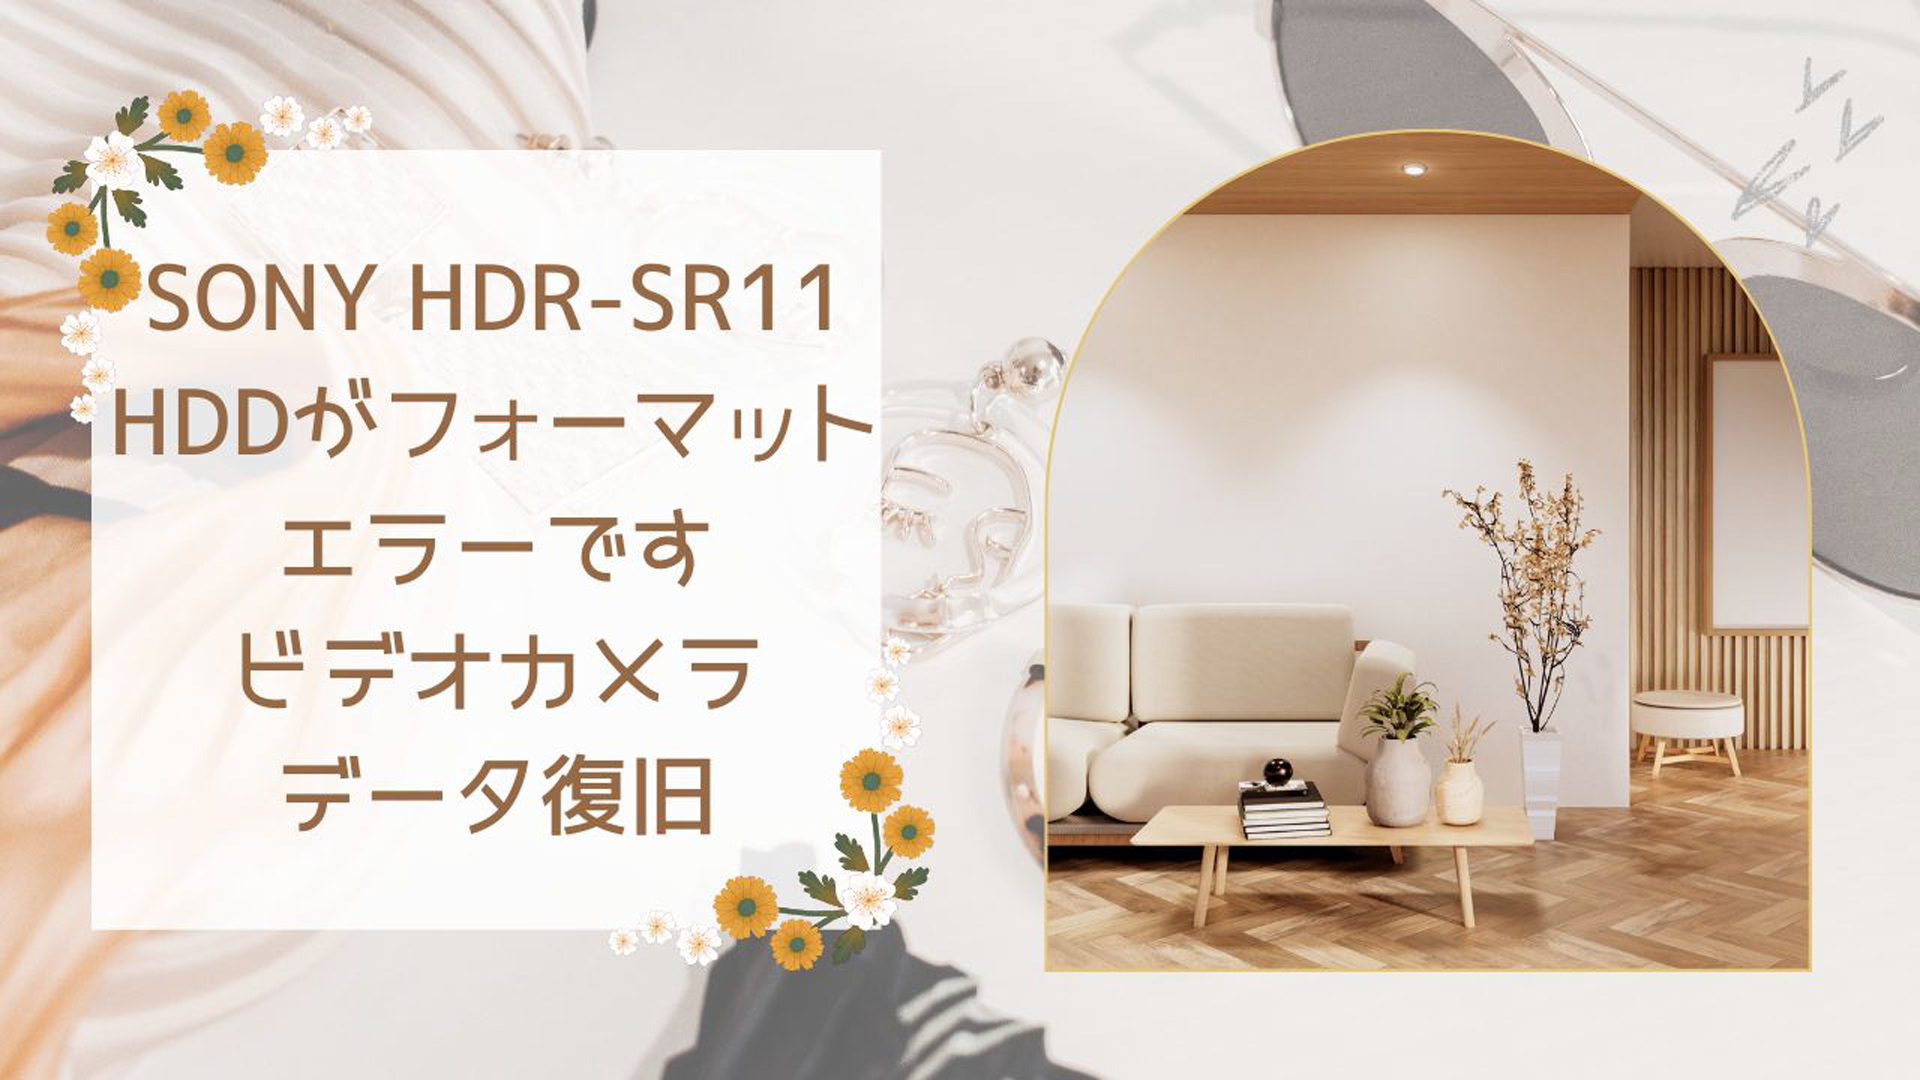 SONY HDR-SR11 HDDフォーマットエラーからのデータ復旧成功事例 藤沢市